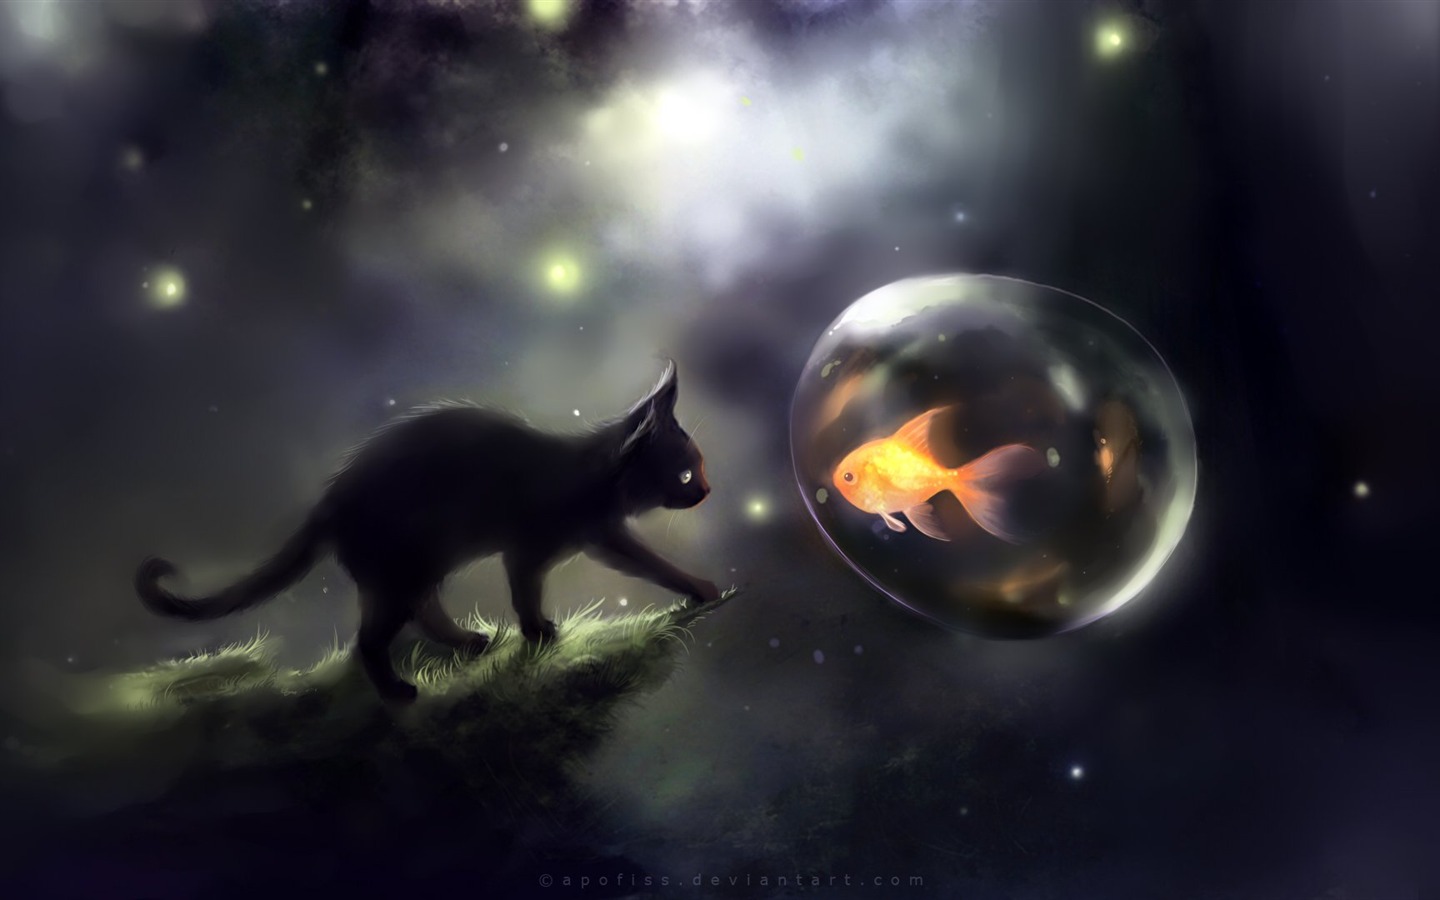 Apofiss kleine schwarze Katze Tapeten Aquarell Abbildungen #1 - 1440x900